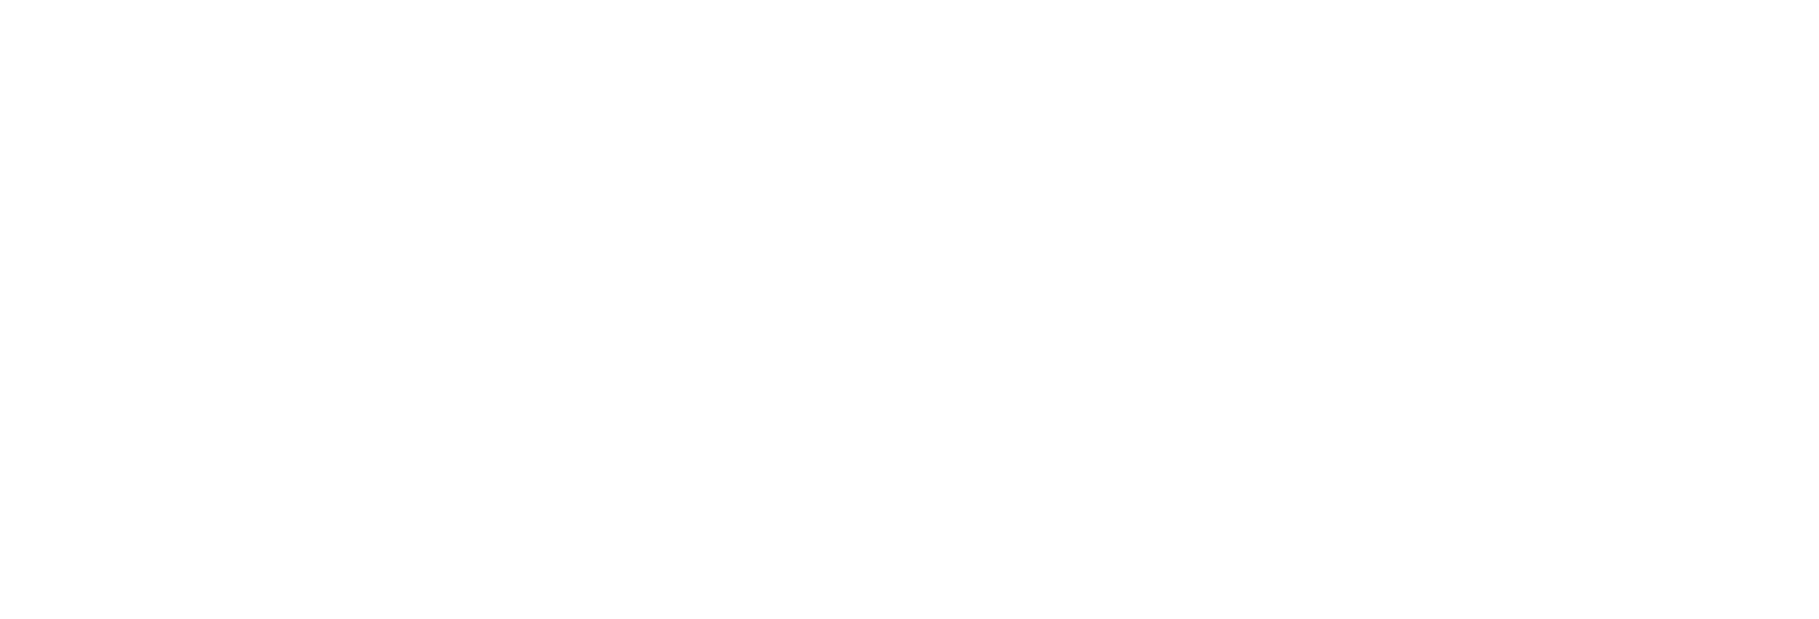 atlas logo bianco